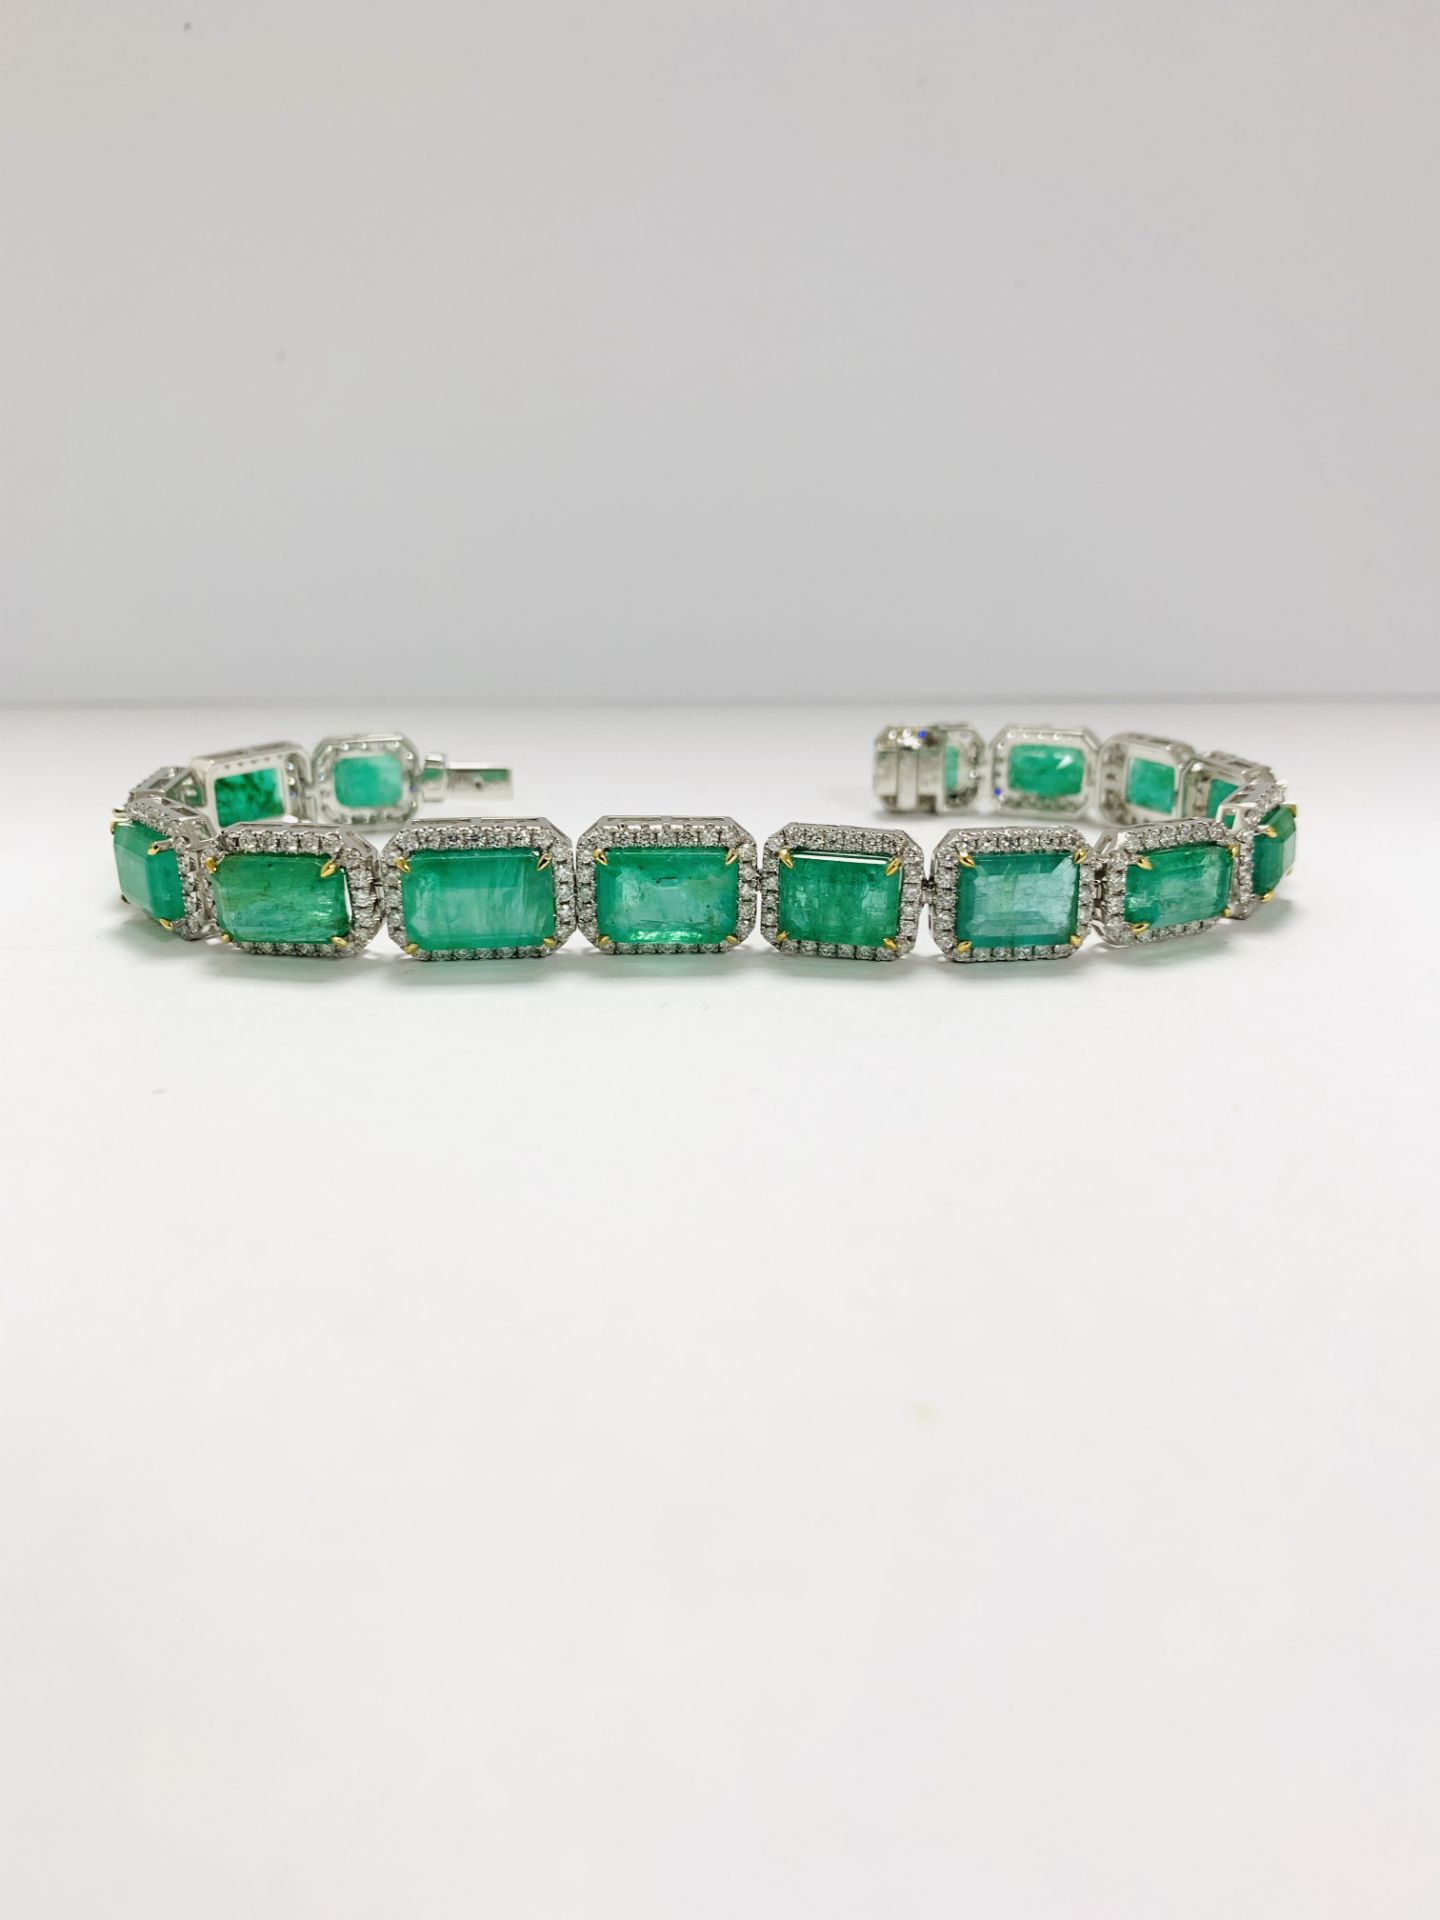 Platinum Emerald and Diamond Necklace